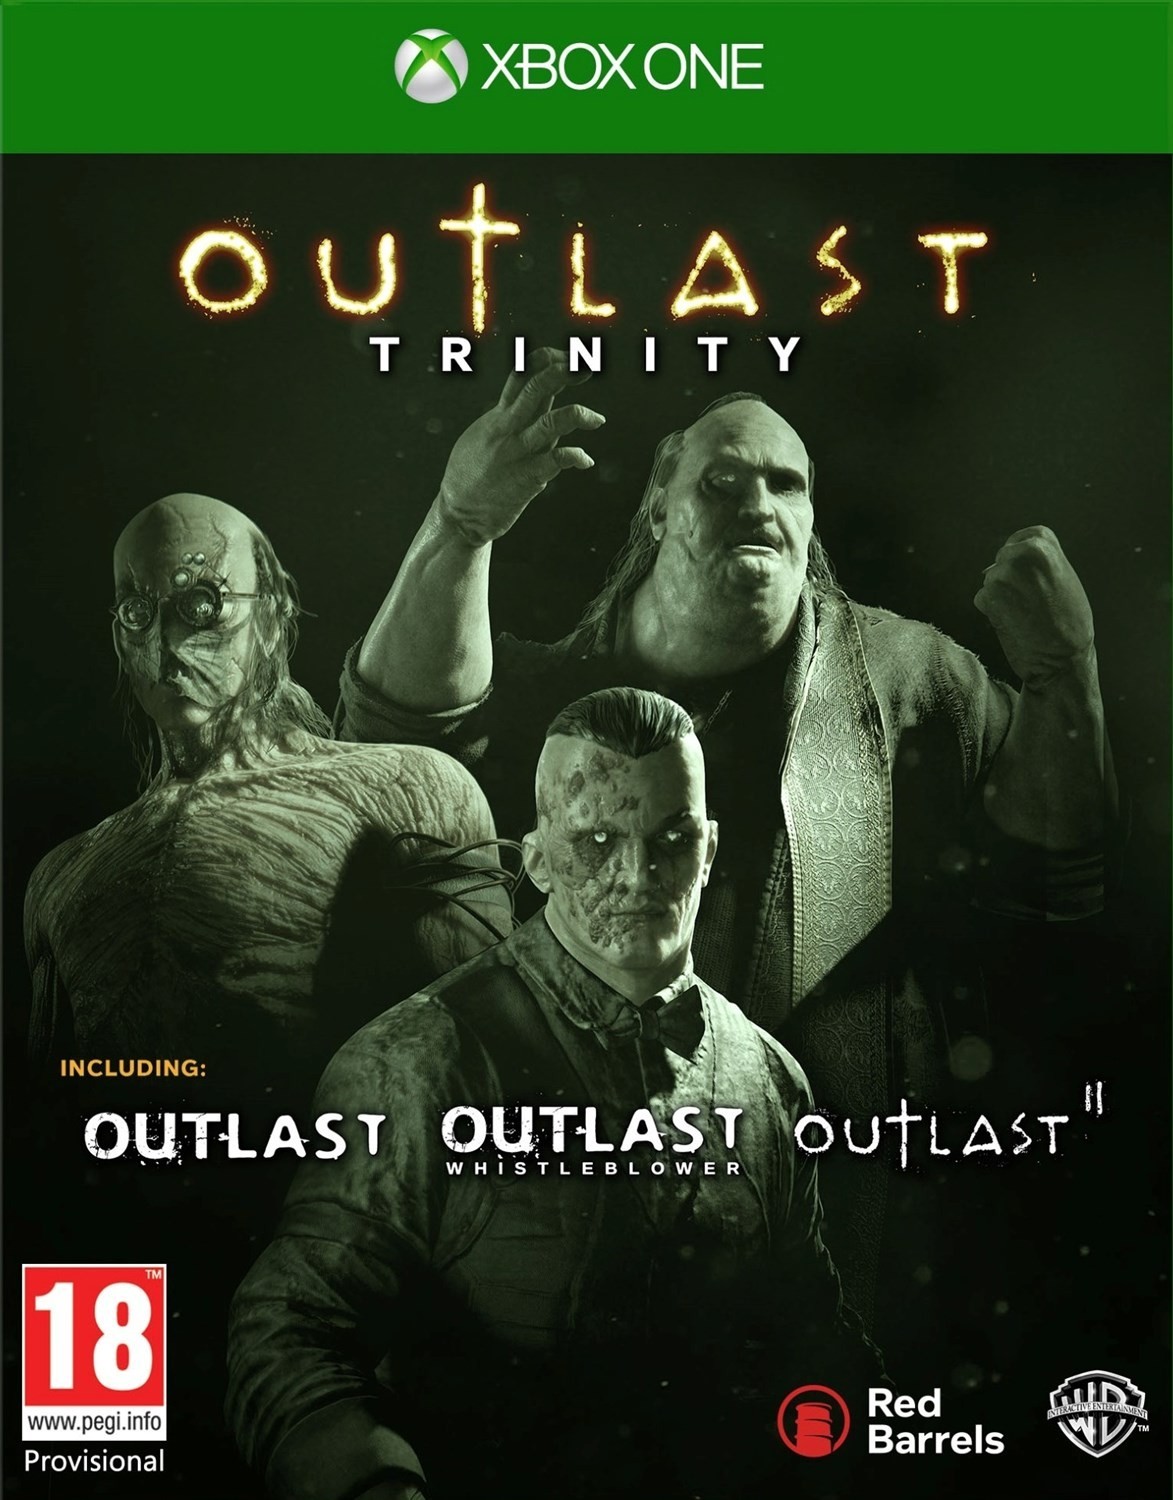 Outlast Trinity (Xbox One), Red Barrels Studio